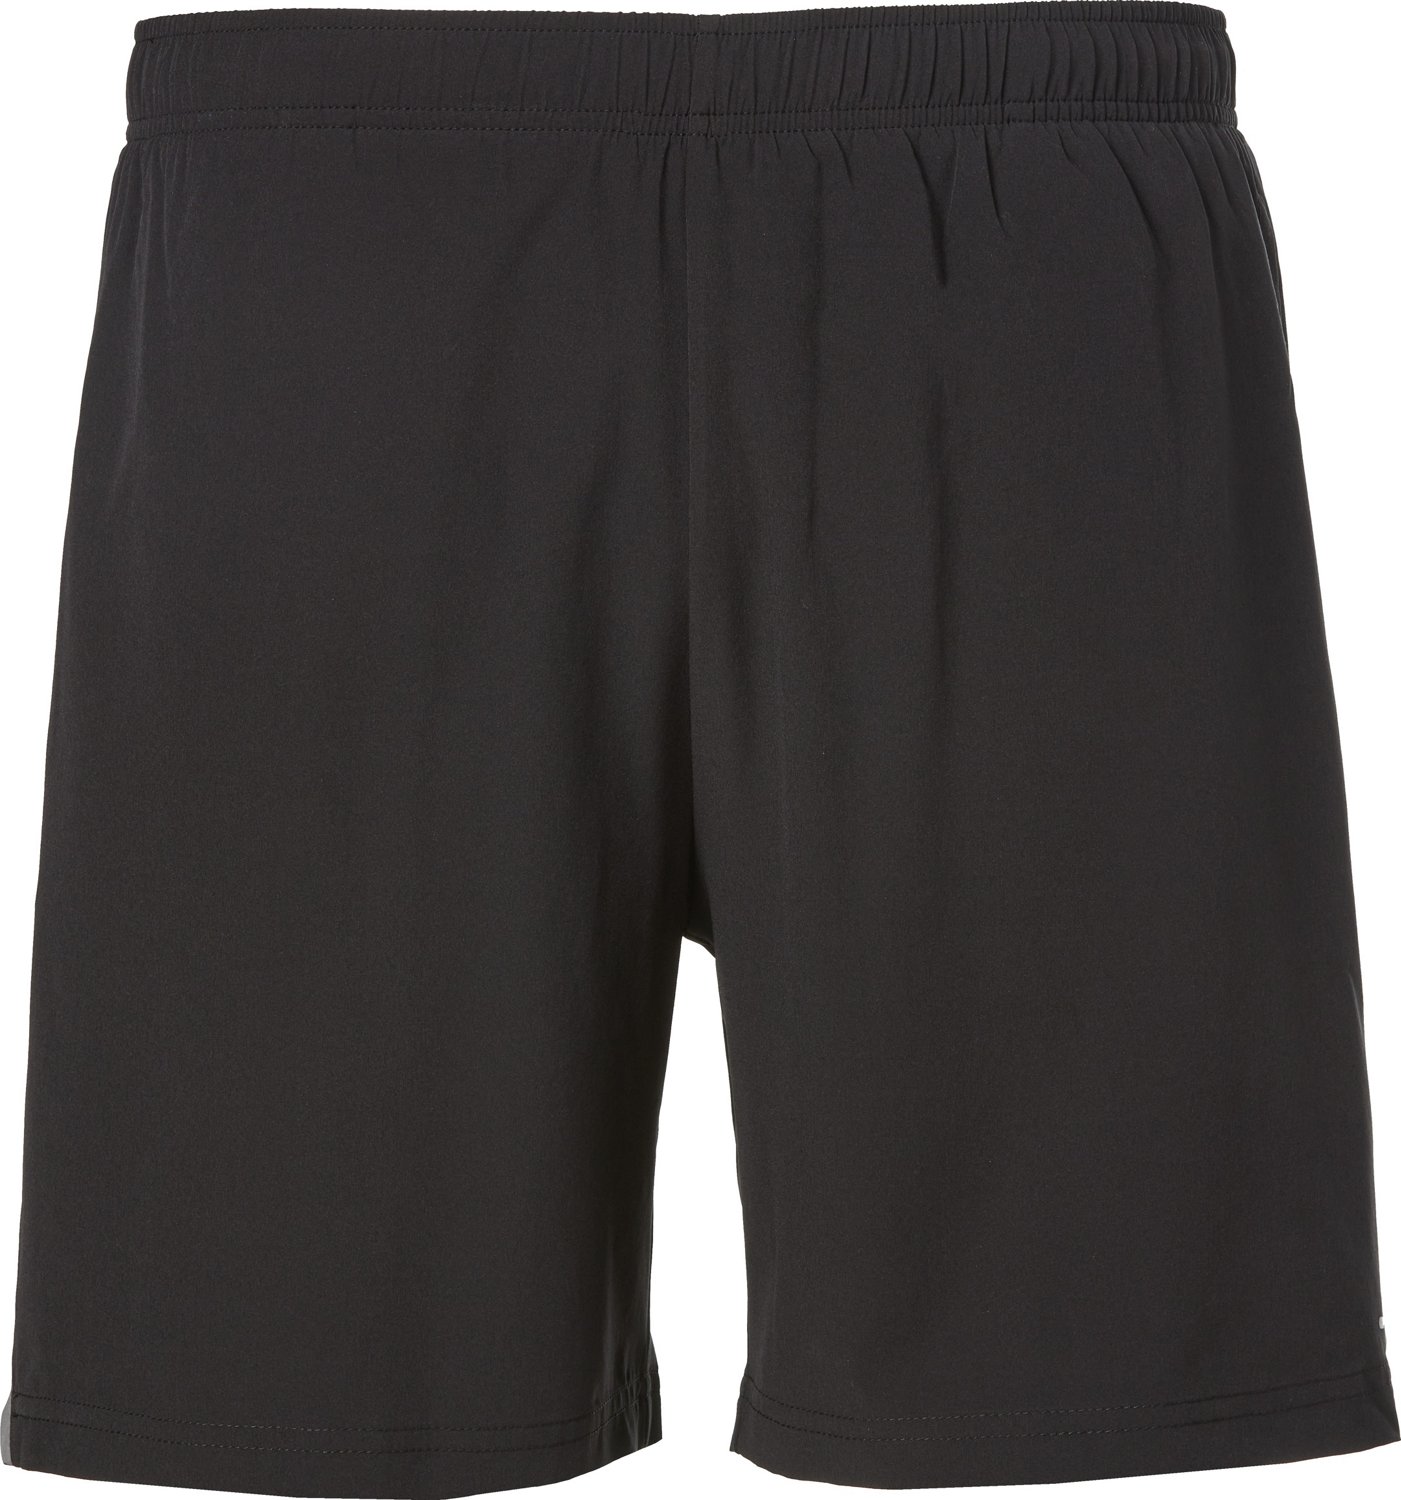 Men's Shorts | Men's Workout Shorts 